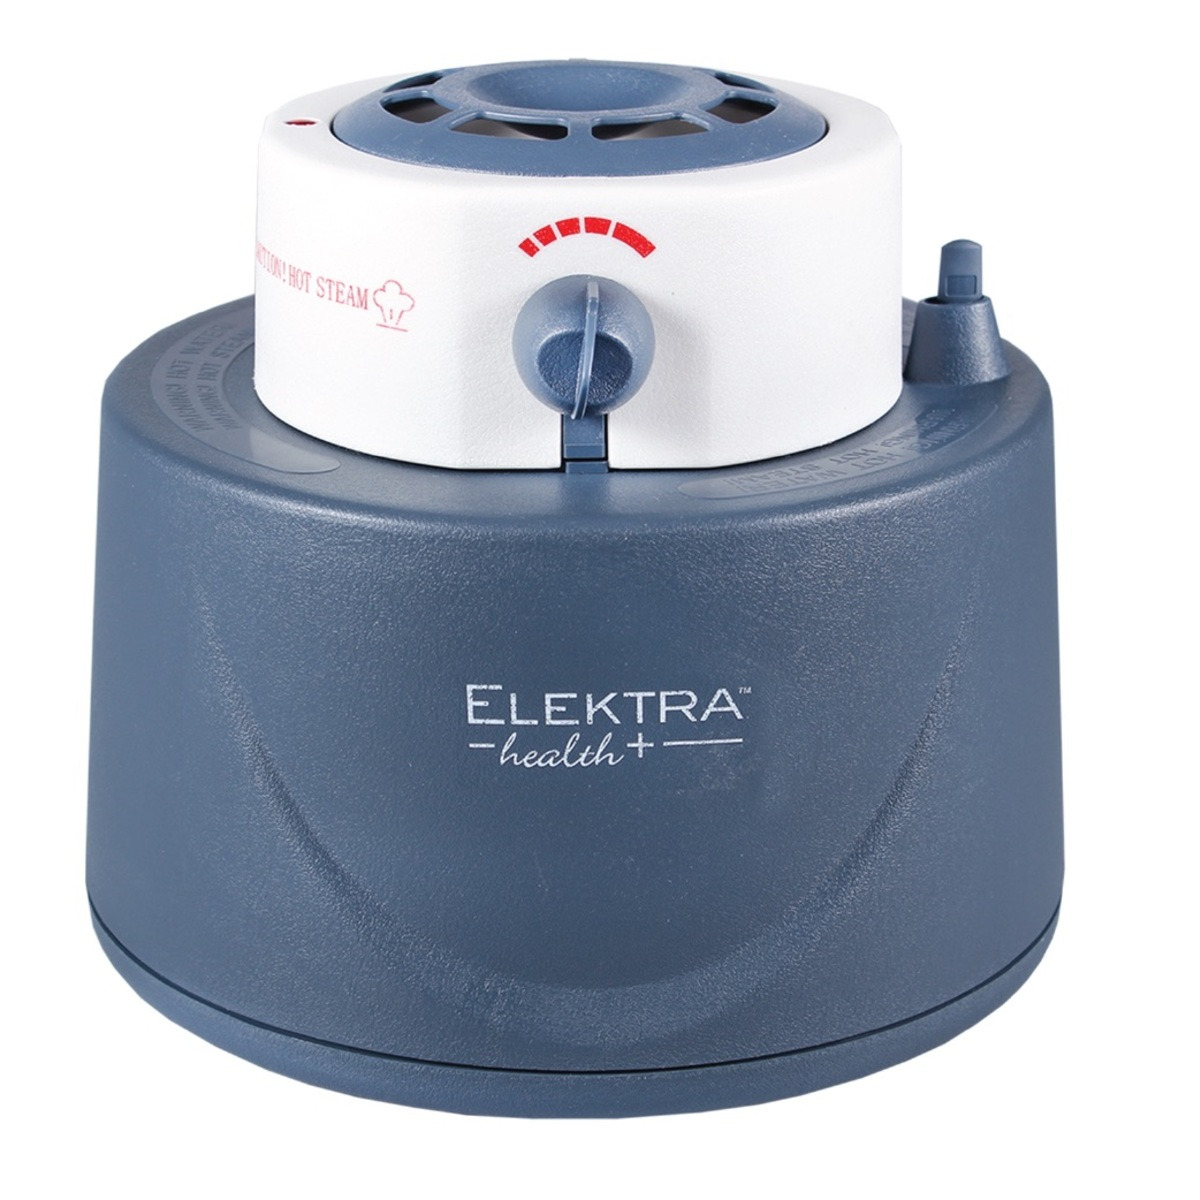 Elektra Electrode Warm Steam Humidifier 3L